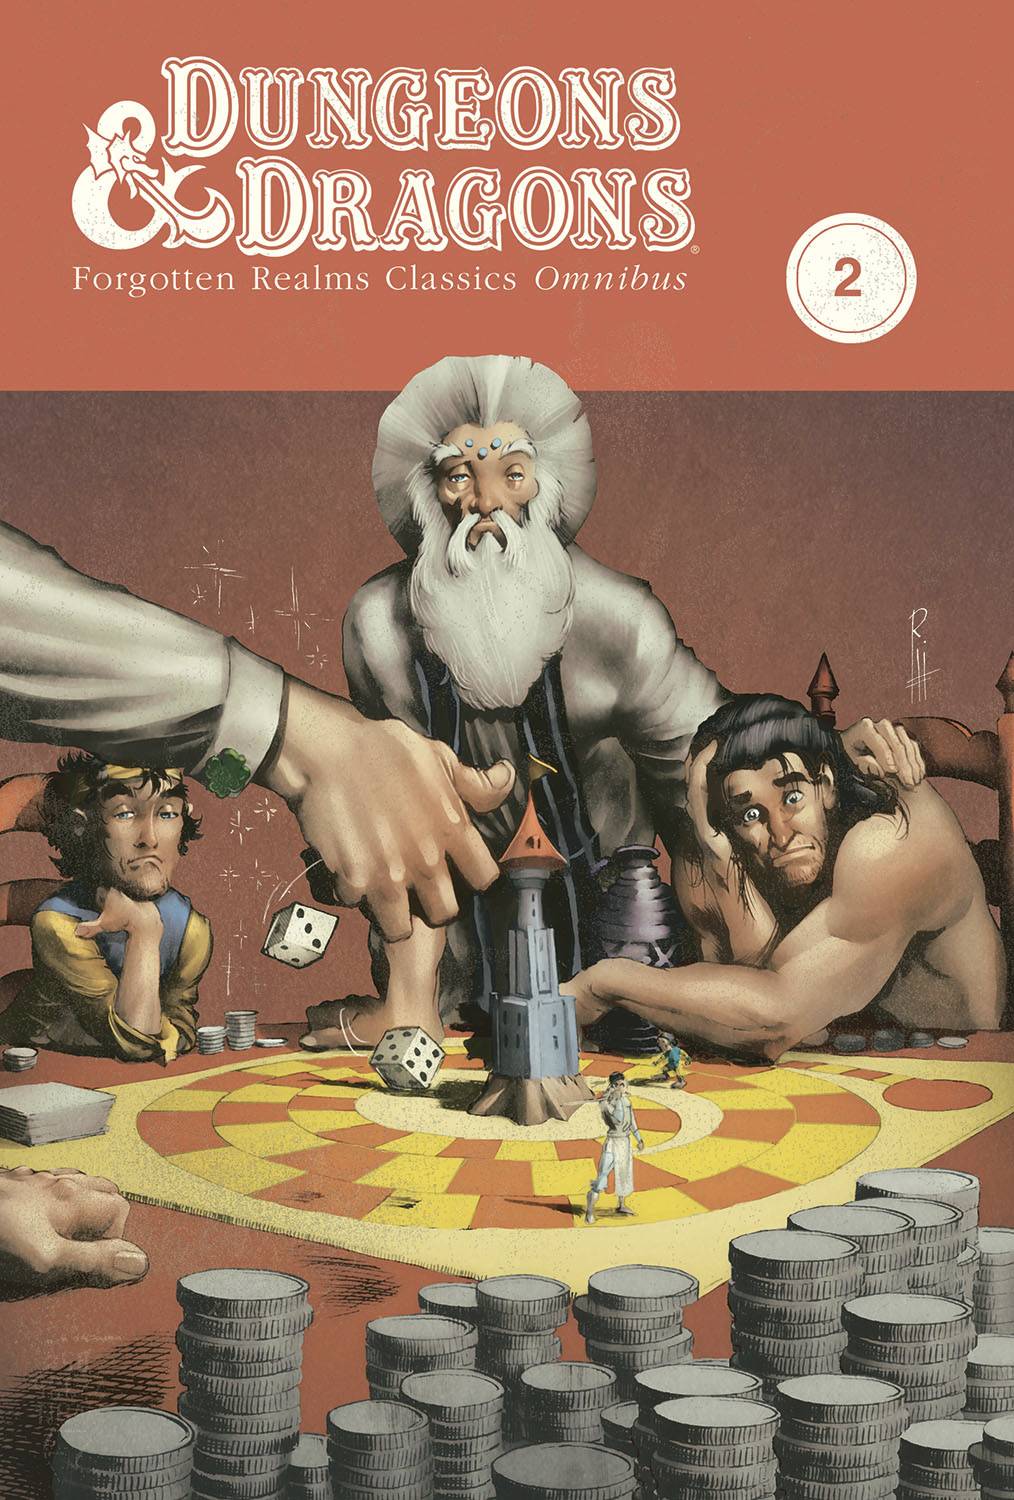 Dungeons & Dragons Forgotten Realms Omnibus Graphic Novel Volume 2